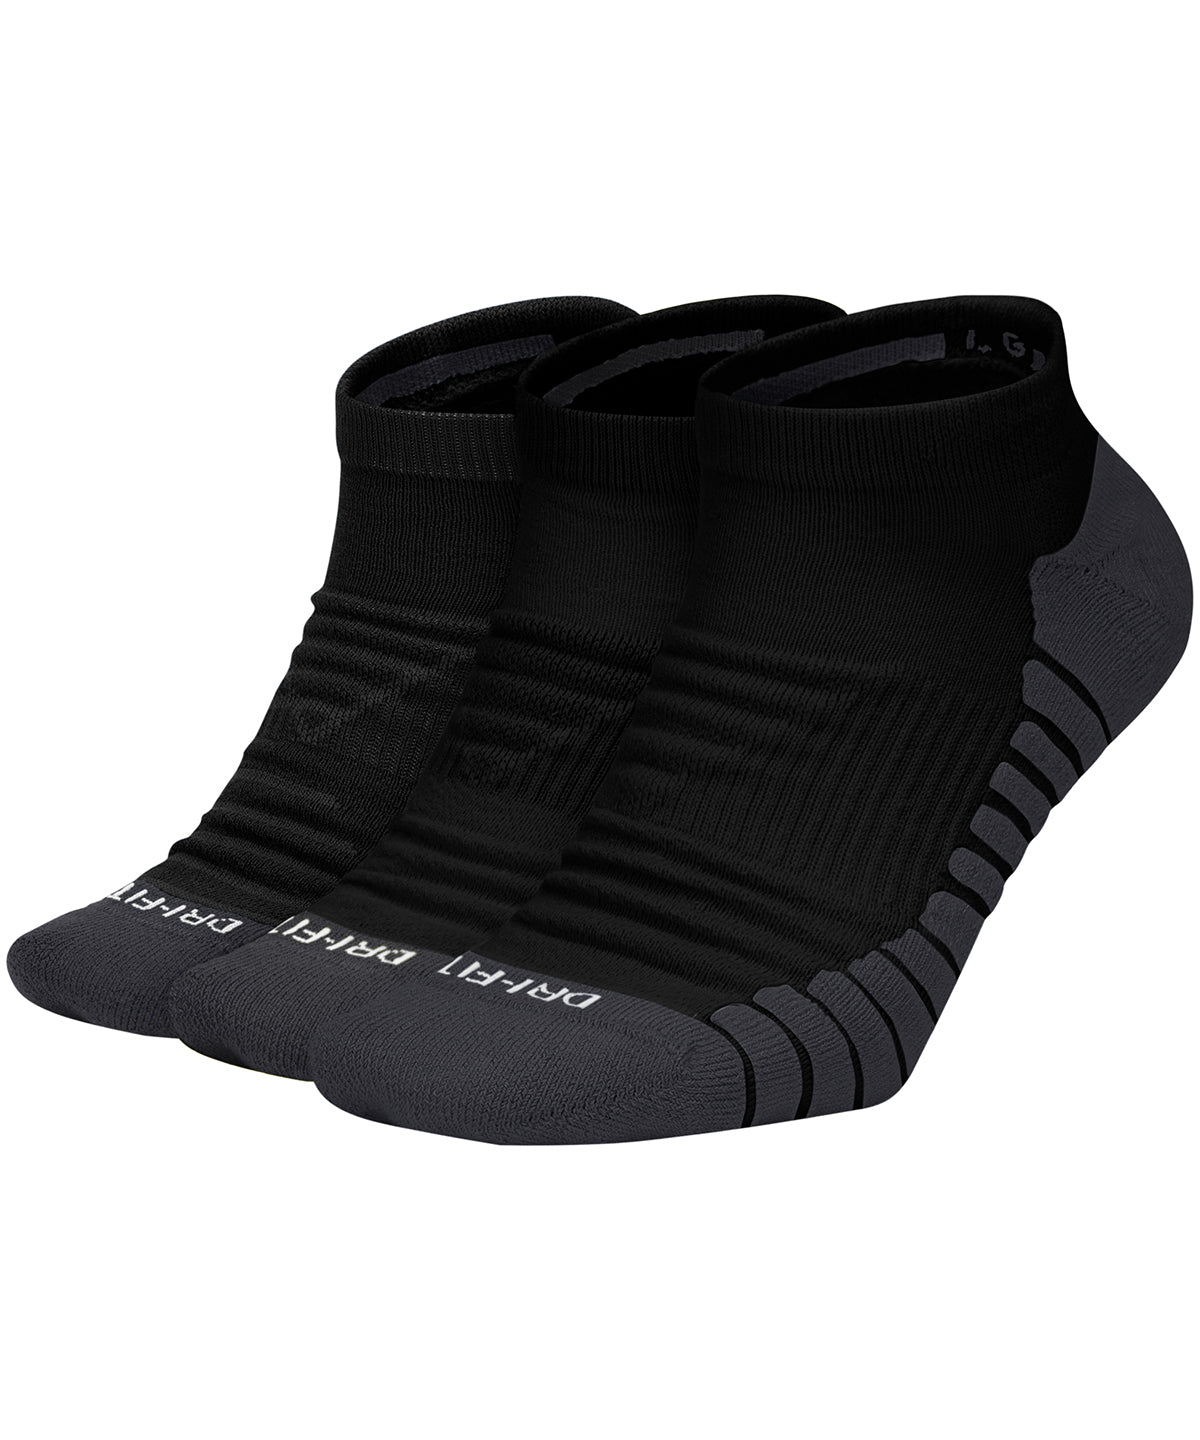 3-pack everyday Dri-FIT max cushioned Nike sokkar